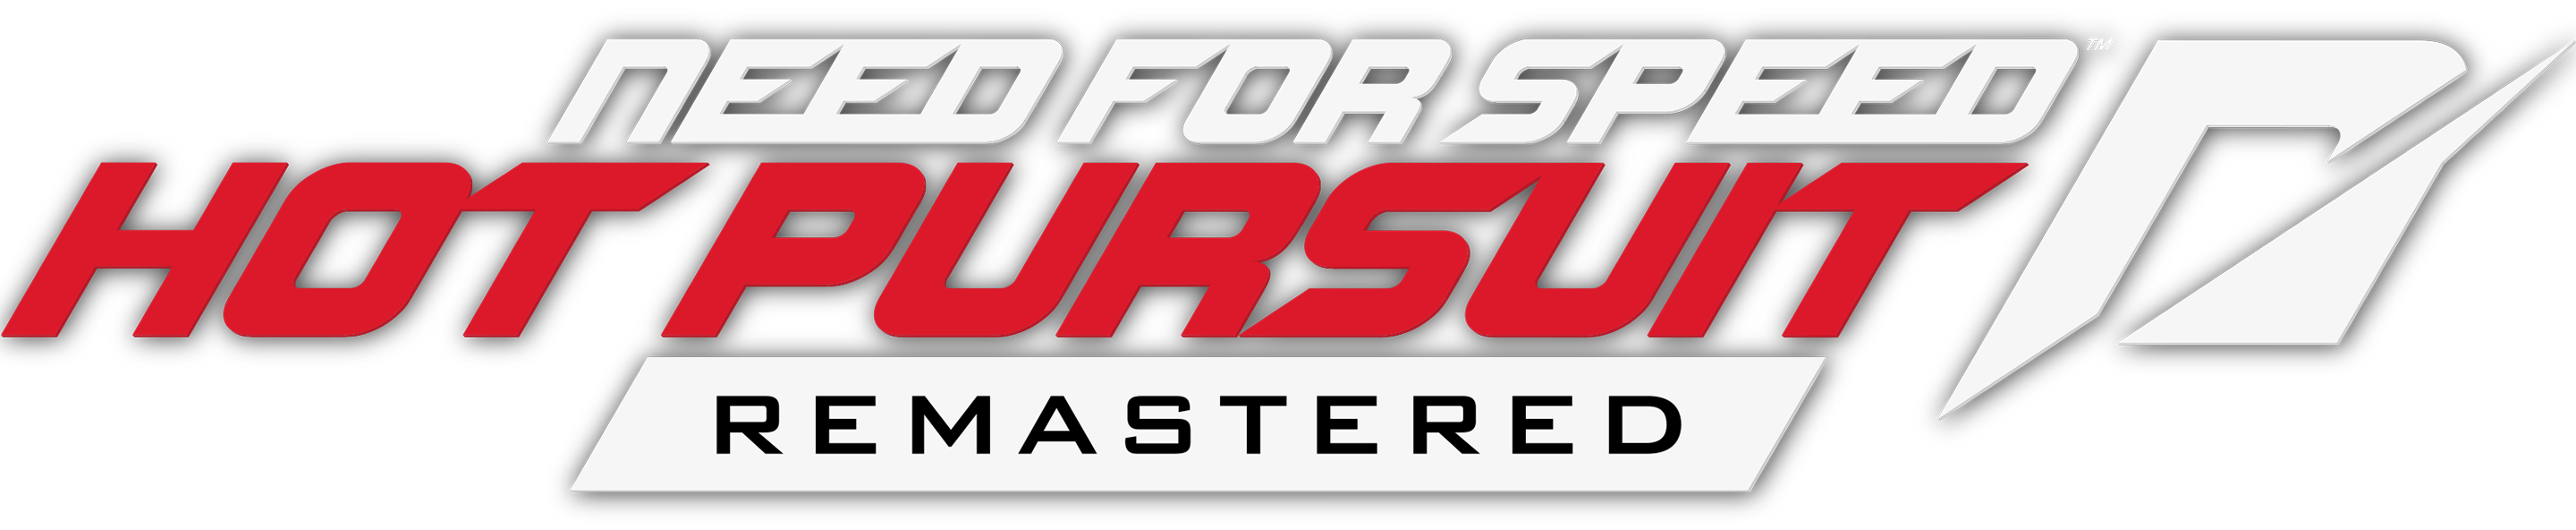 Ник спид. NFS логотип. Need for Speed hot Pursuit ремастер. Логотип need for Speed hot Pursuit Remastered. Need for Speed hot Pursuit Remastered logo.